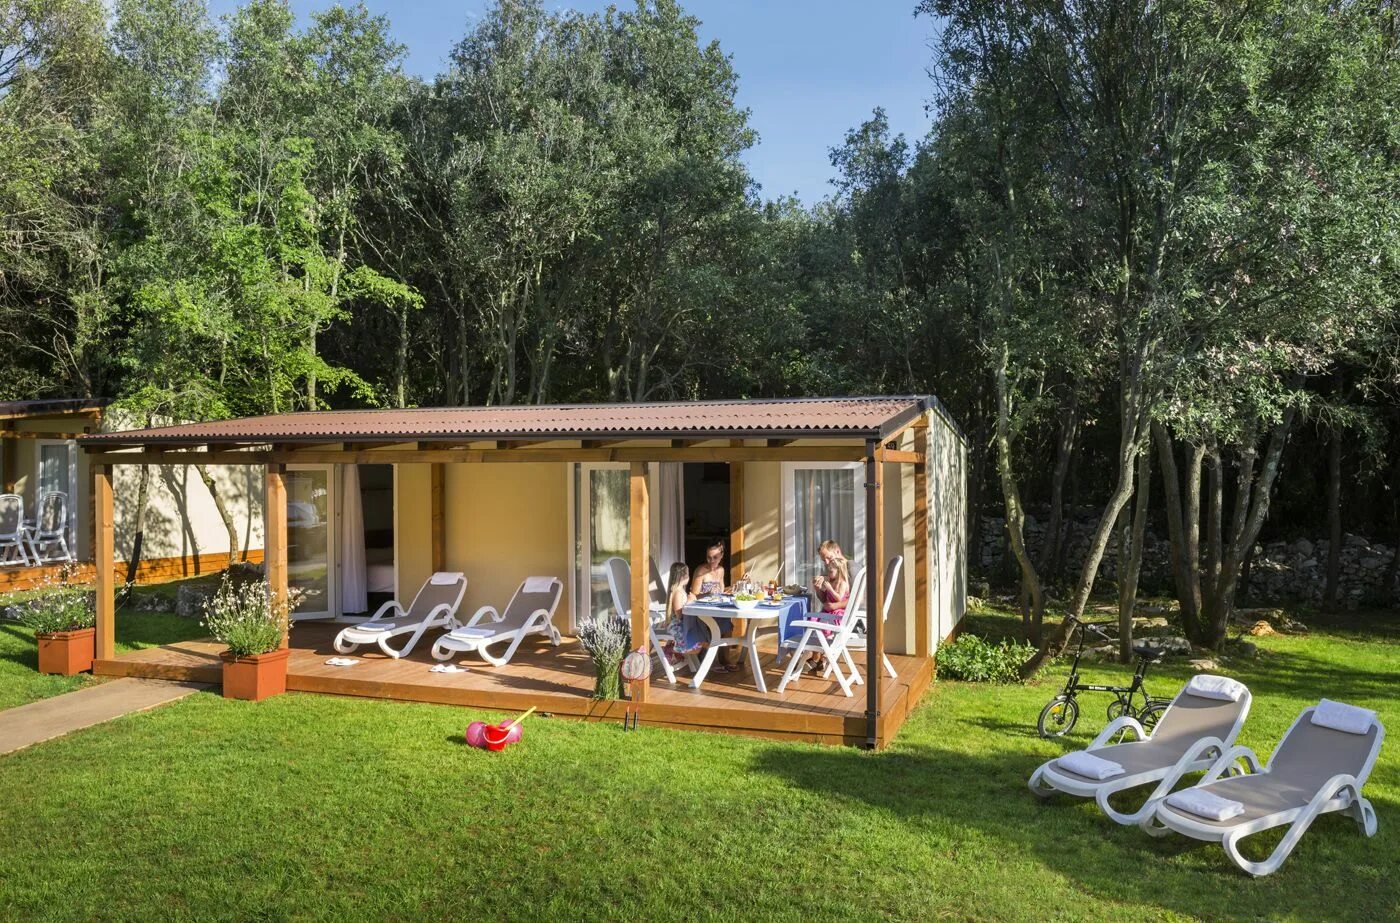 Camping home. Хорватия кемпинг. Ровинь передвижные дома для отдыха. Camping Polari Rovinj Istria Croatia fkk.